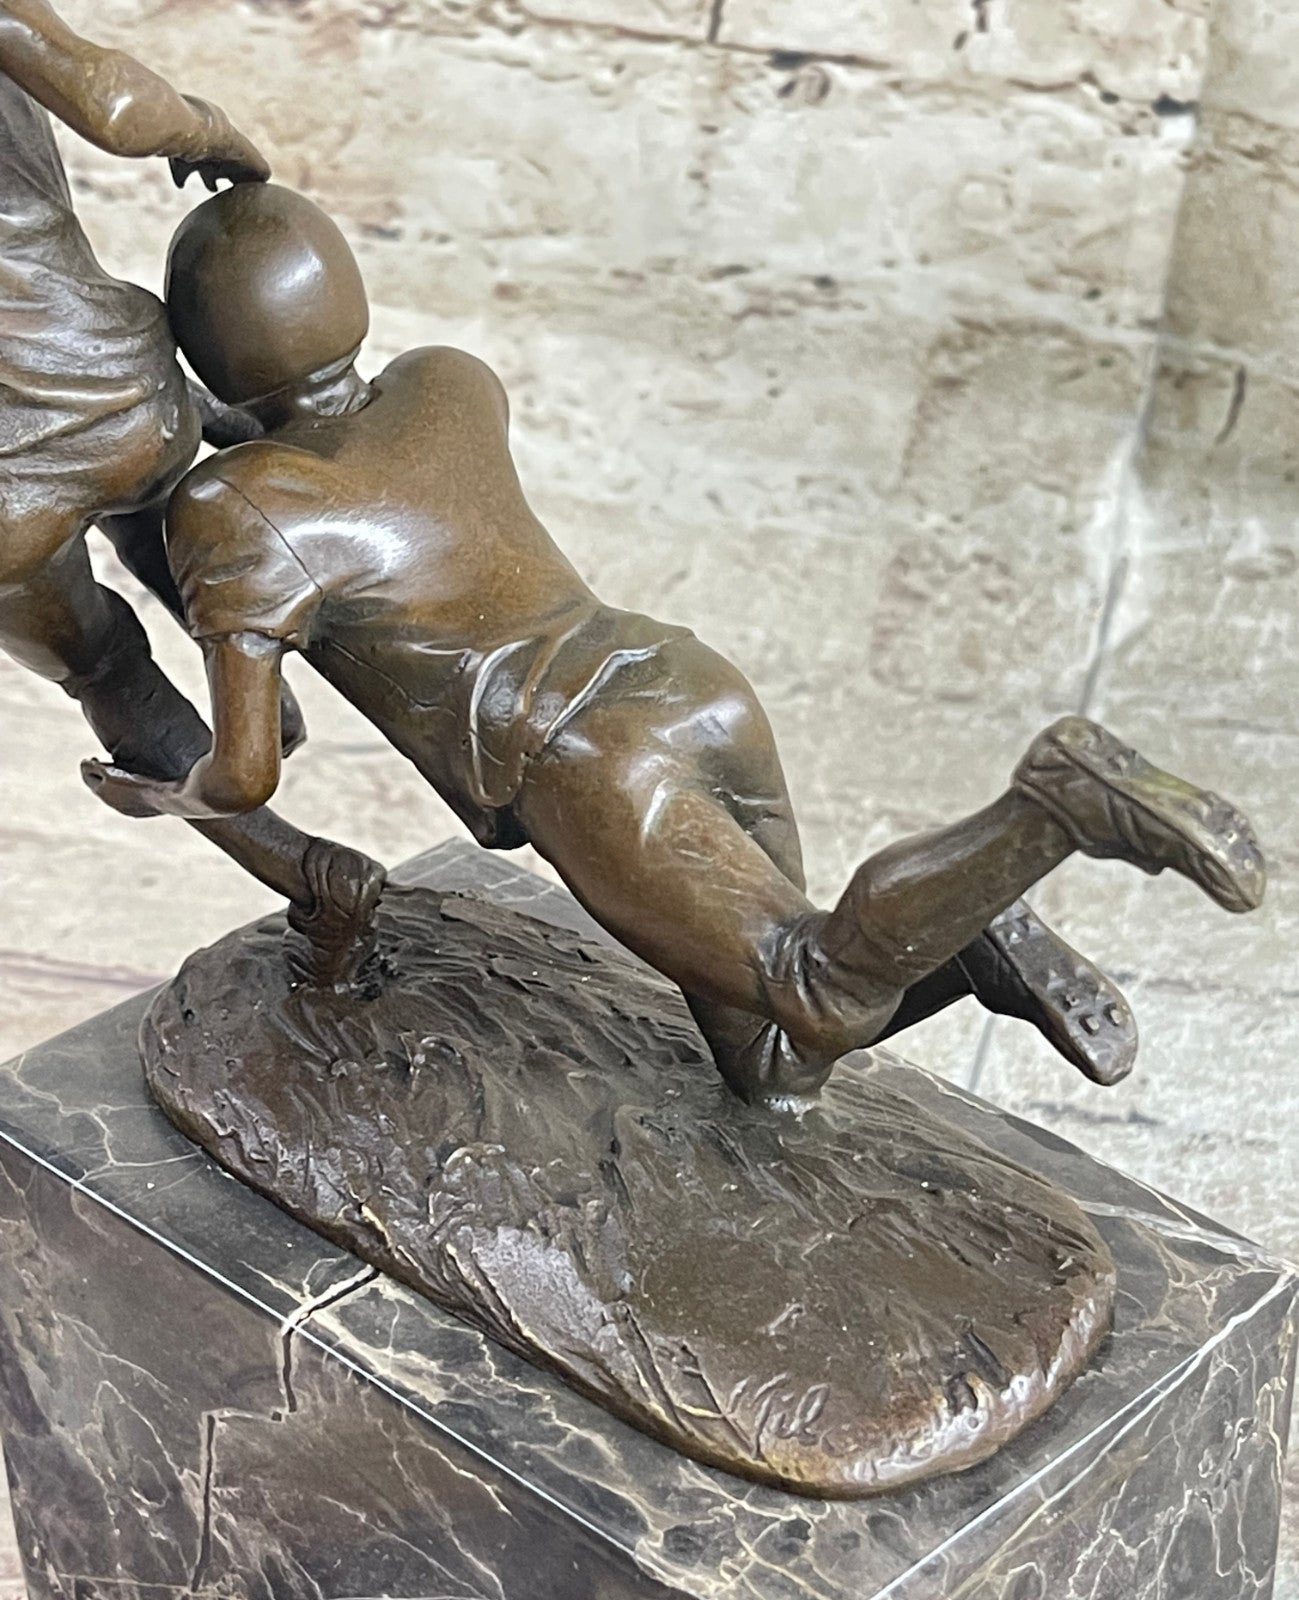 Football Player 9" Tall Beautiful Bronze Statue / Sculpture Brand New Figurine